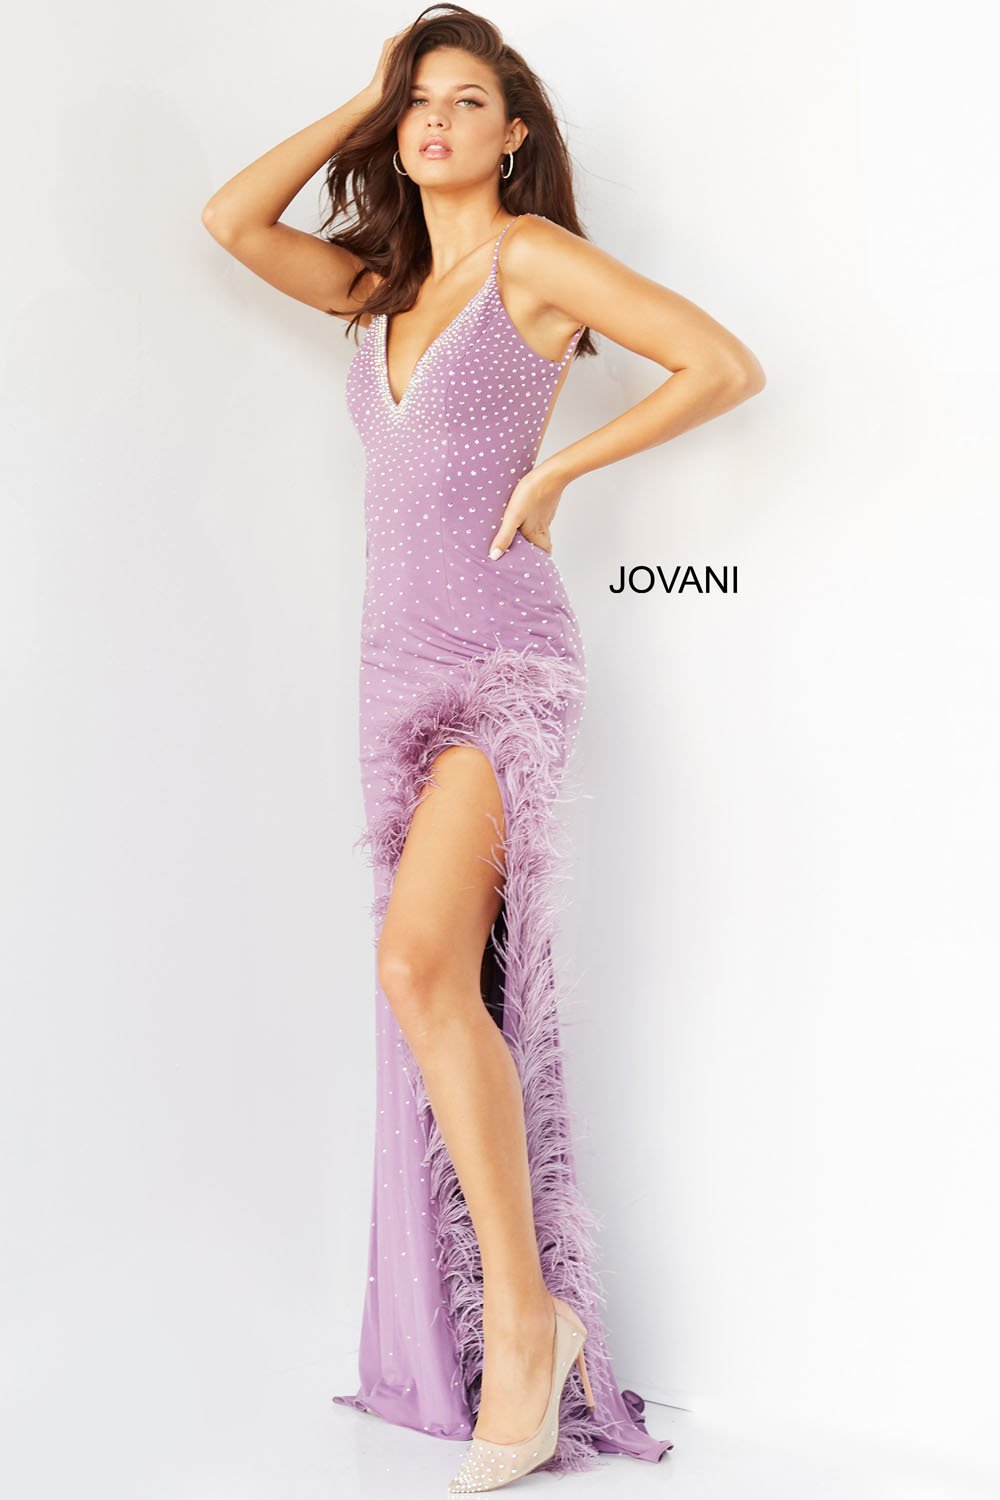 Jovani 08283 Lilac prom dresses images.